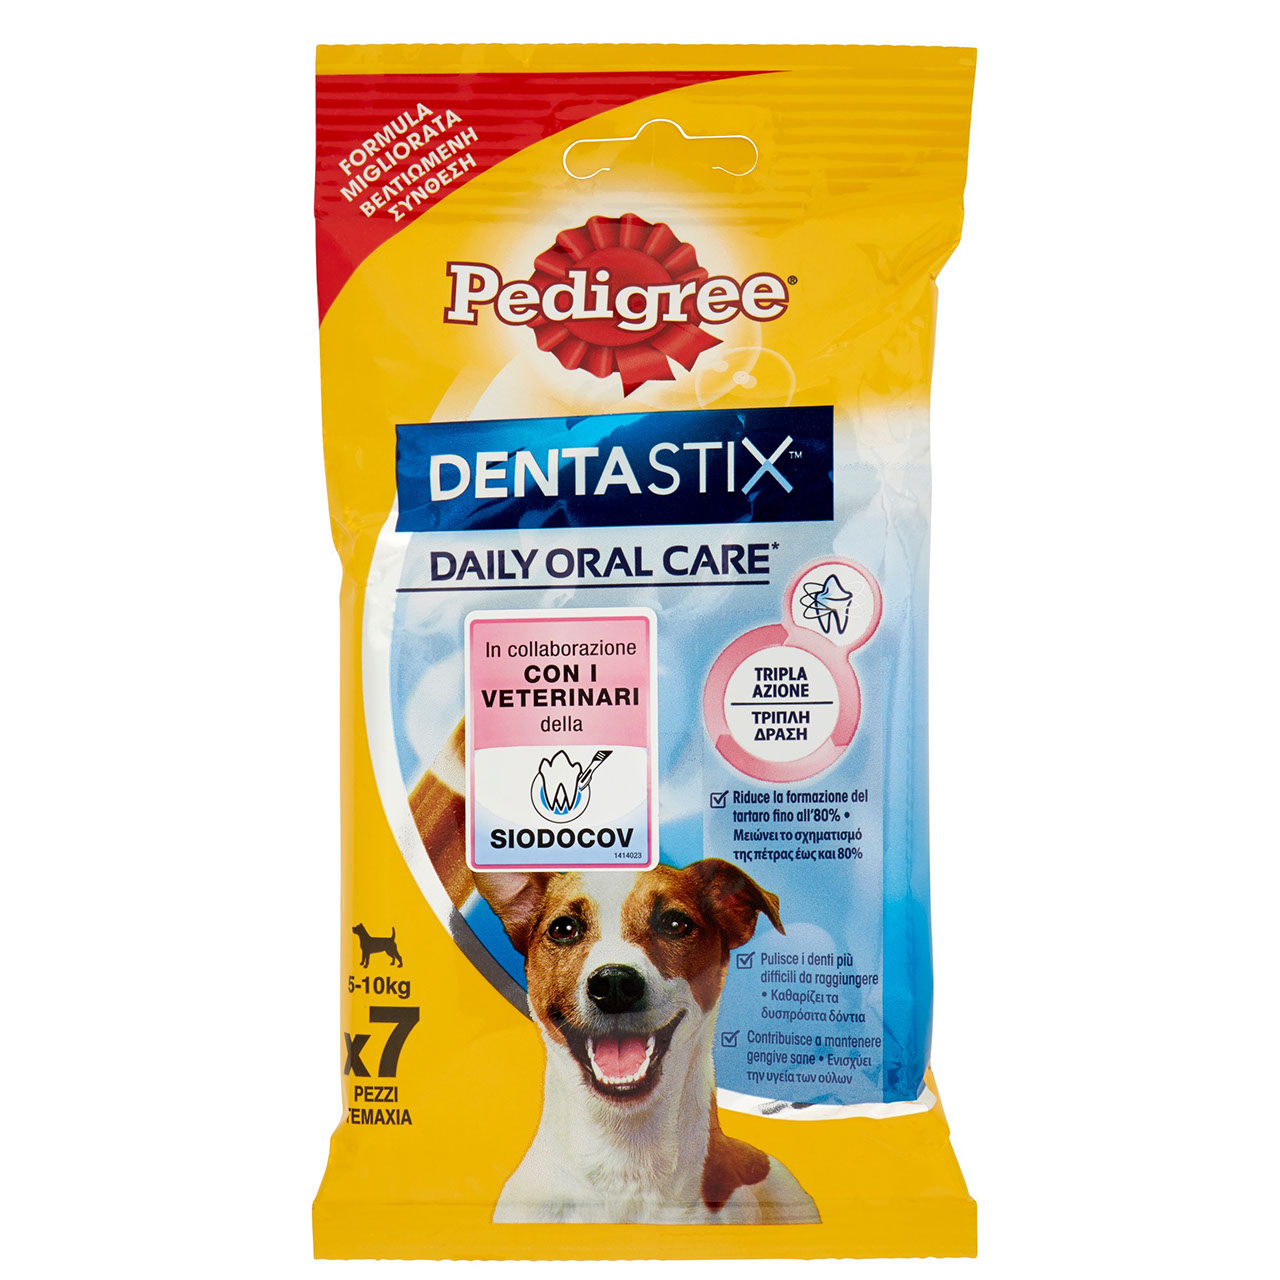 Pedigree DentaStix Daily Oral Care* 5-10 kg 7 Pezzi 110 g